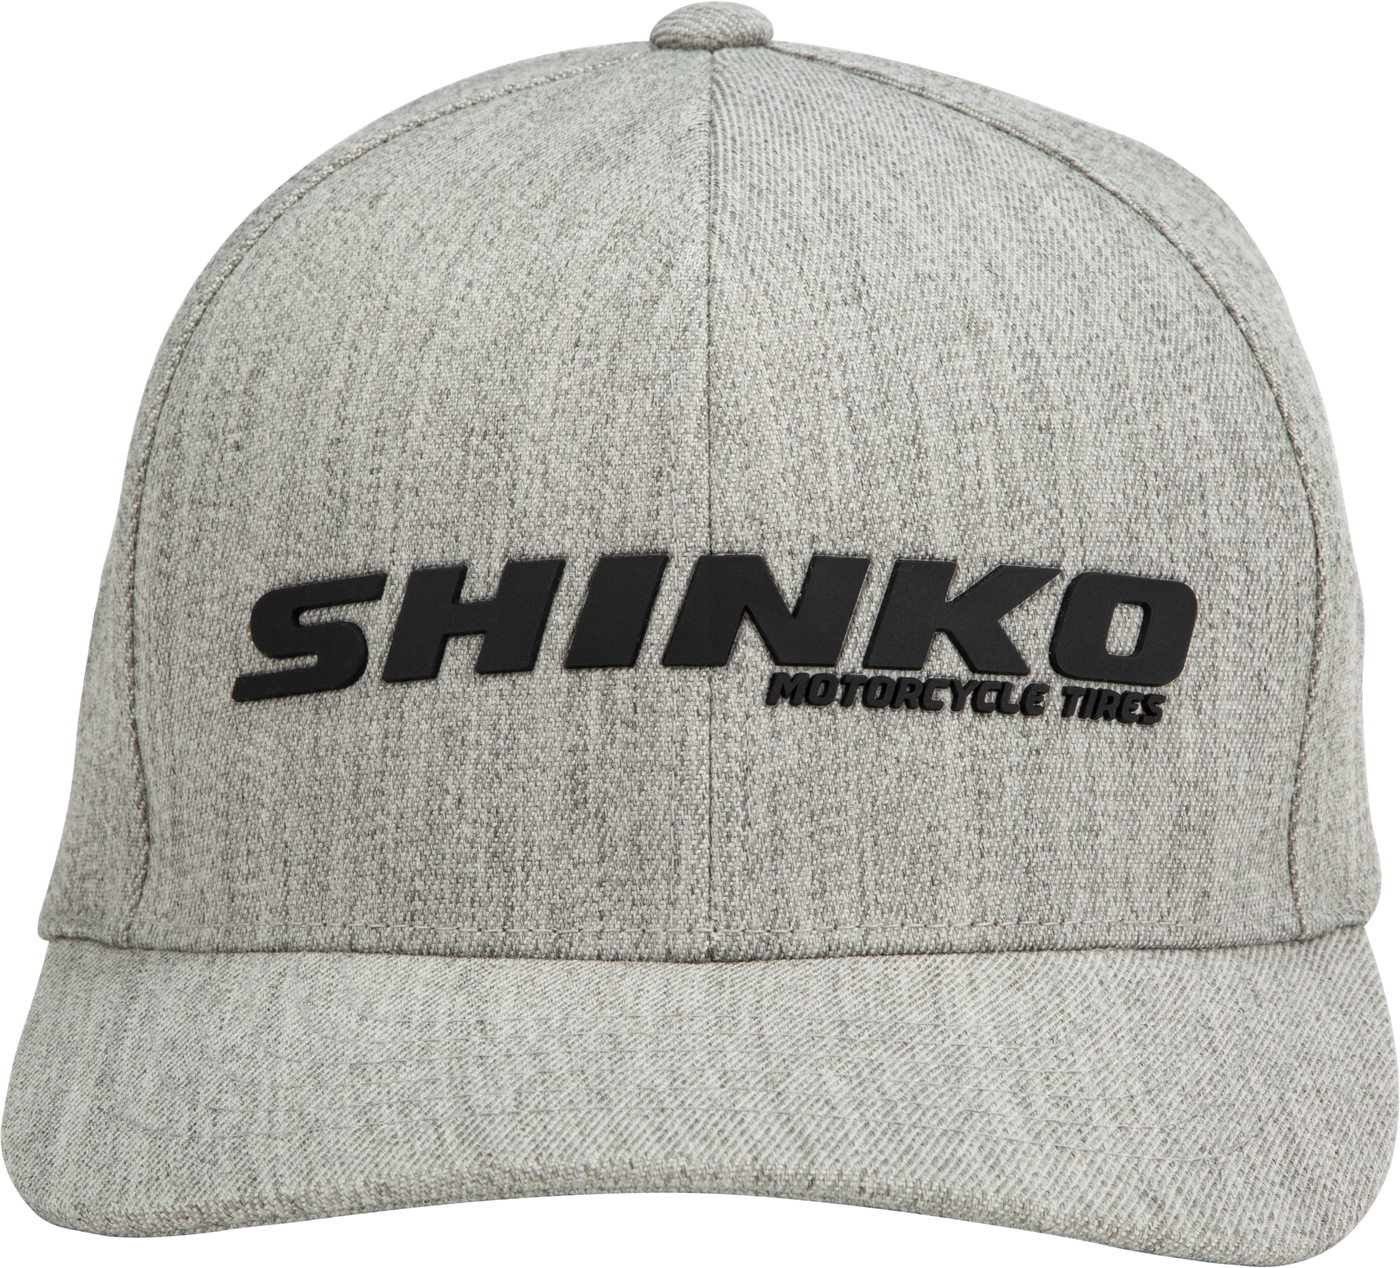 Shinko Flexfit Hat Grey - Sm/md